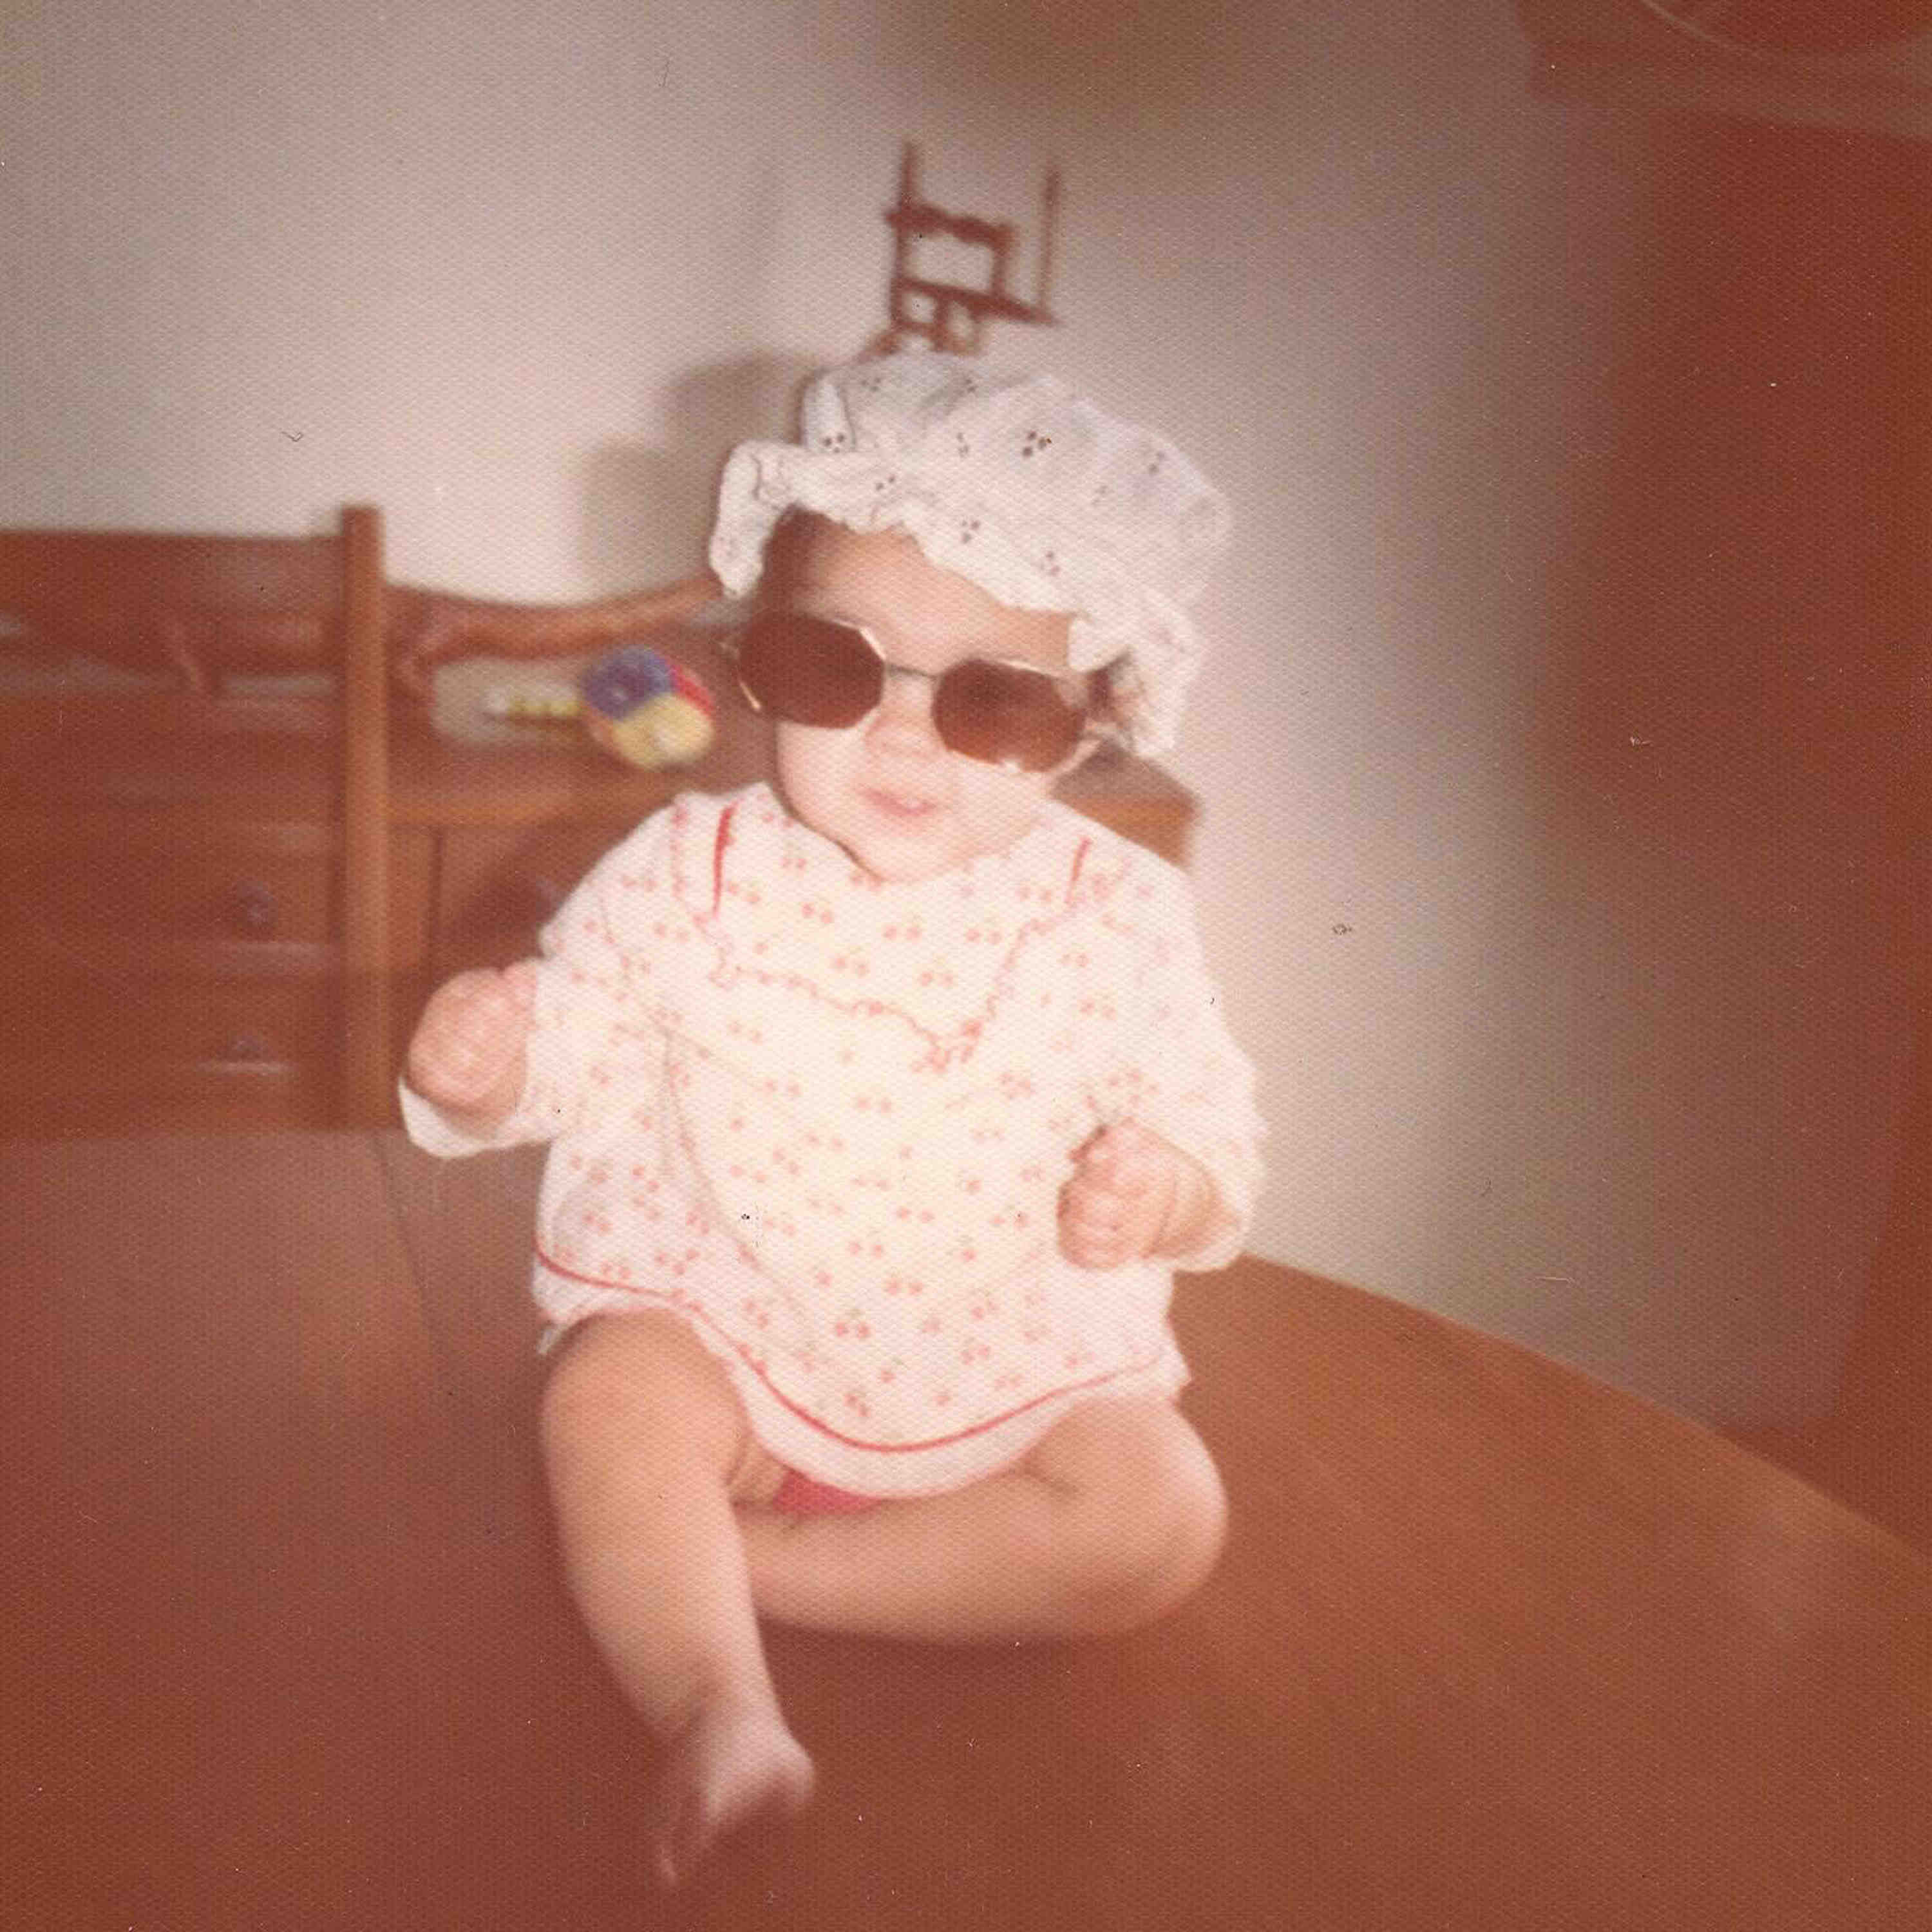 Victoria as a baby